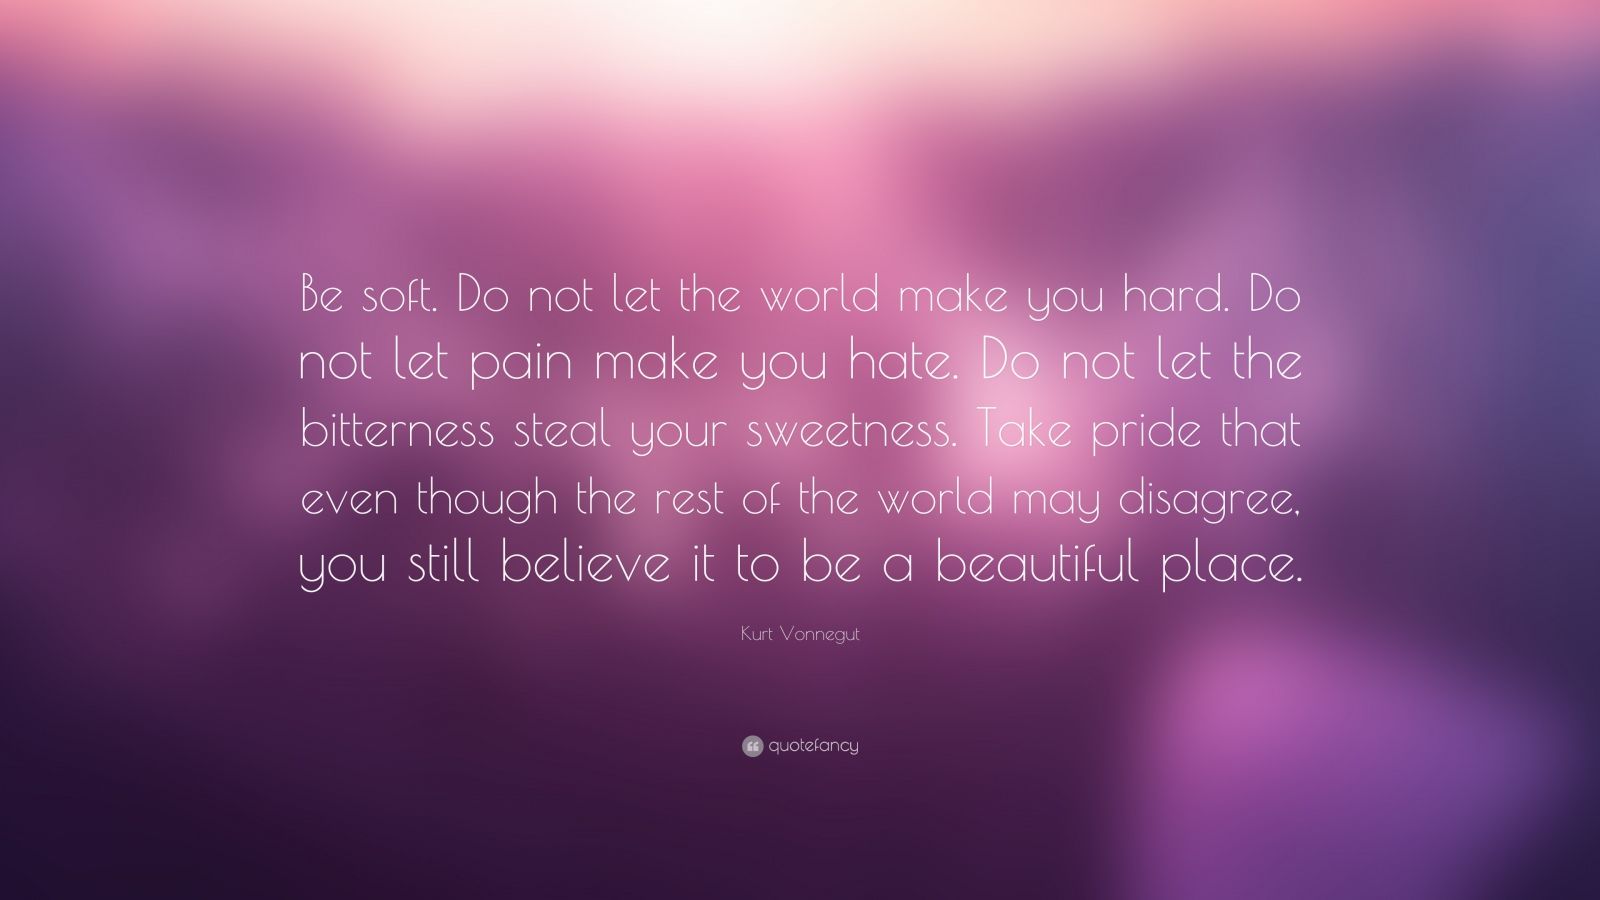 Kurt Vonnegut Quote: “Be soft. Do not let the world make you hard. Do